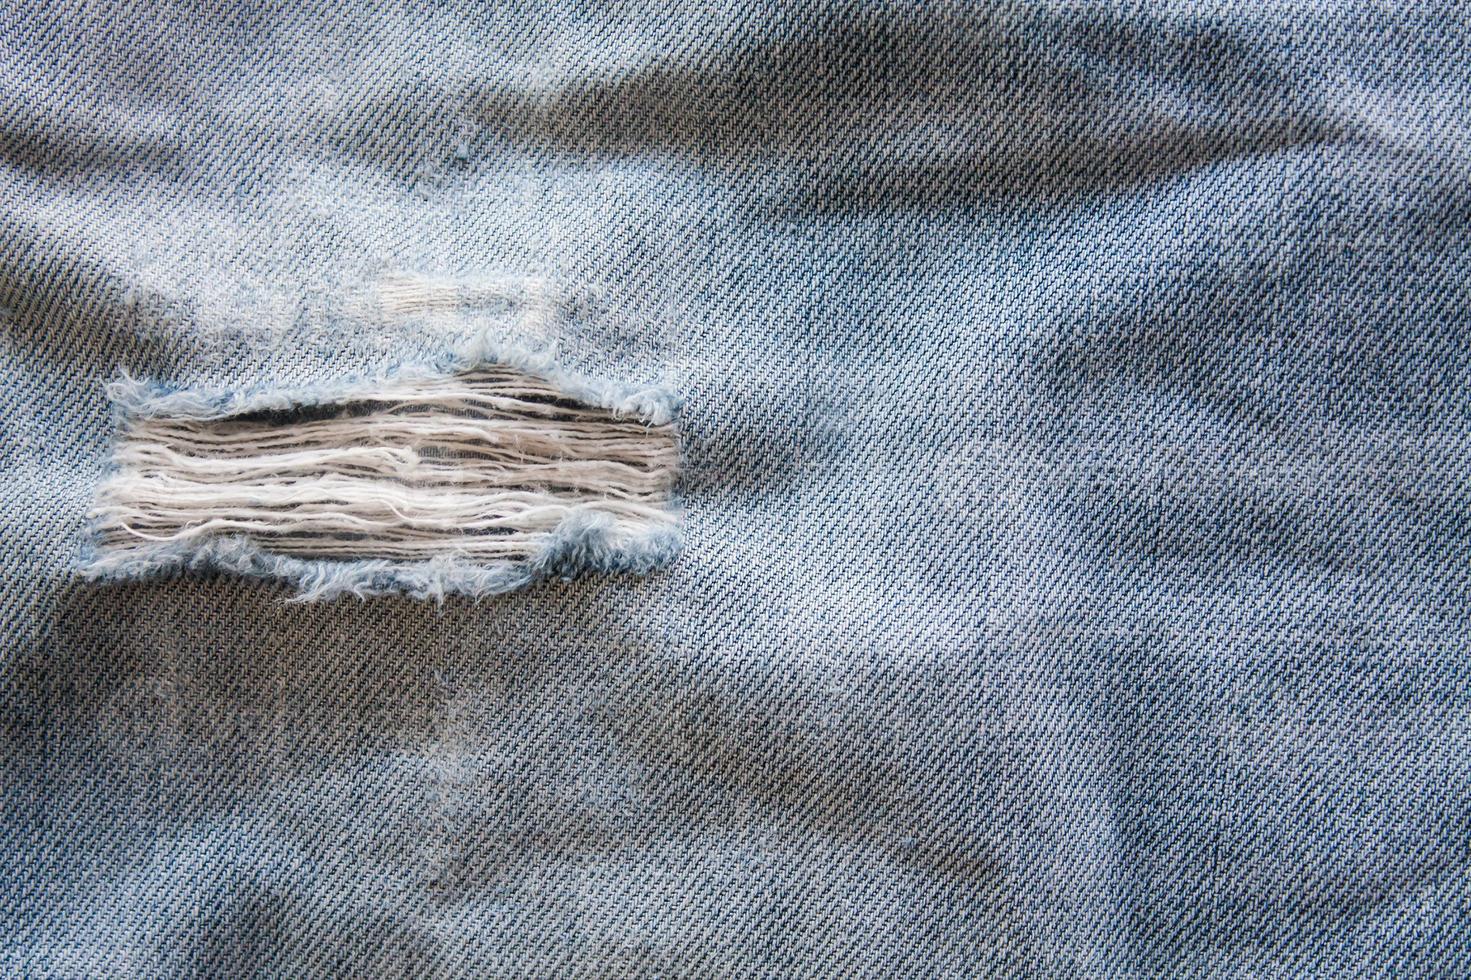 Jeans torn denim texture photo